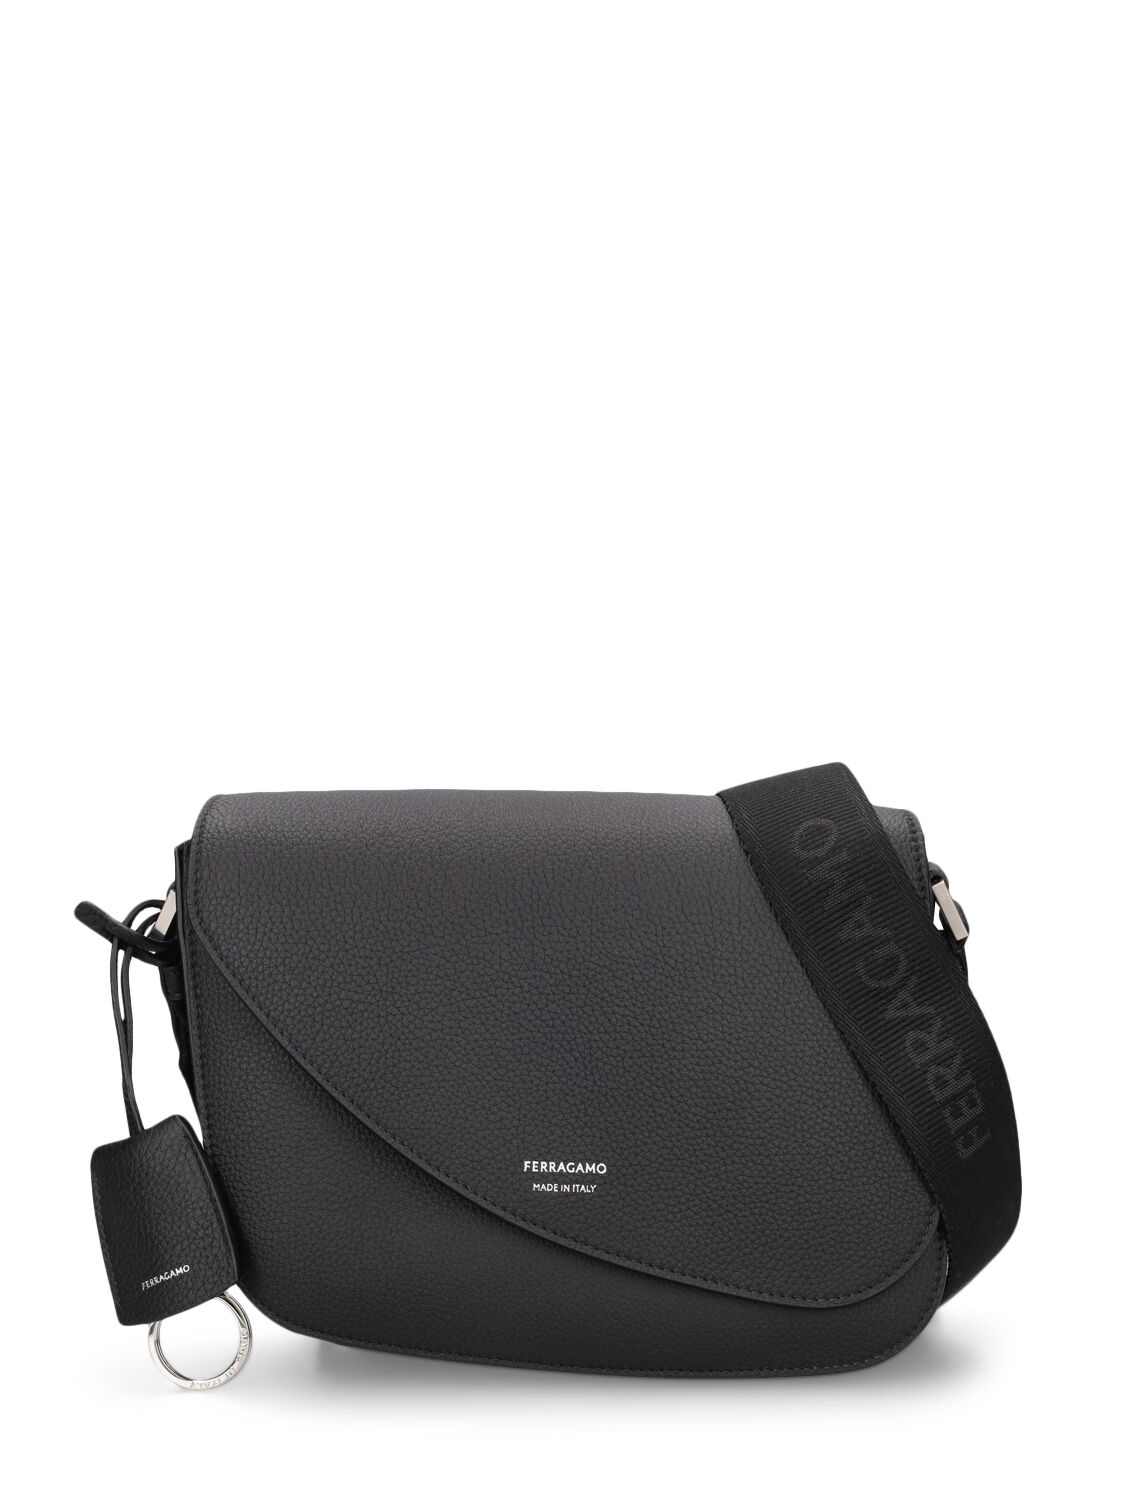 Ferragamo Fiamma Leather Crossbody Bag In Black